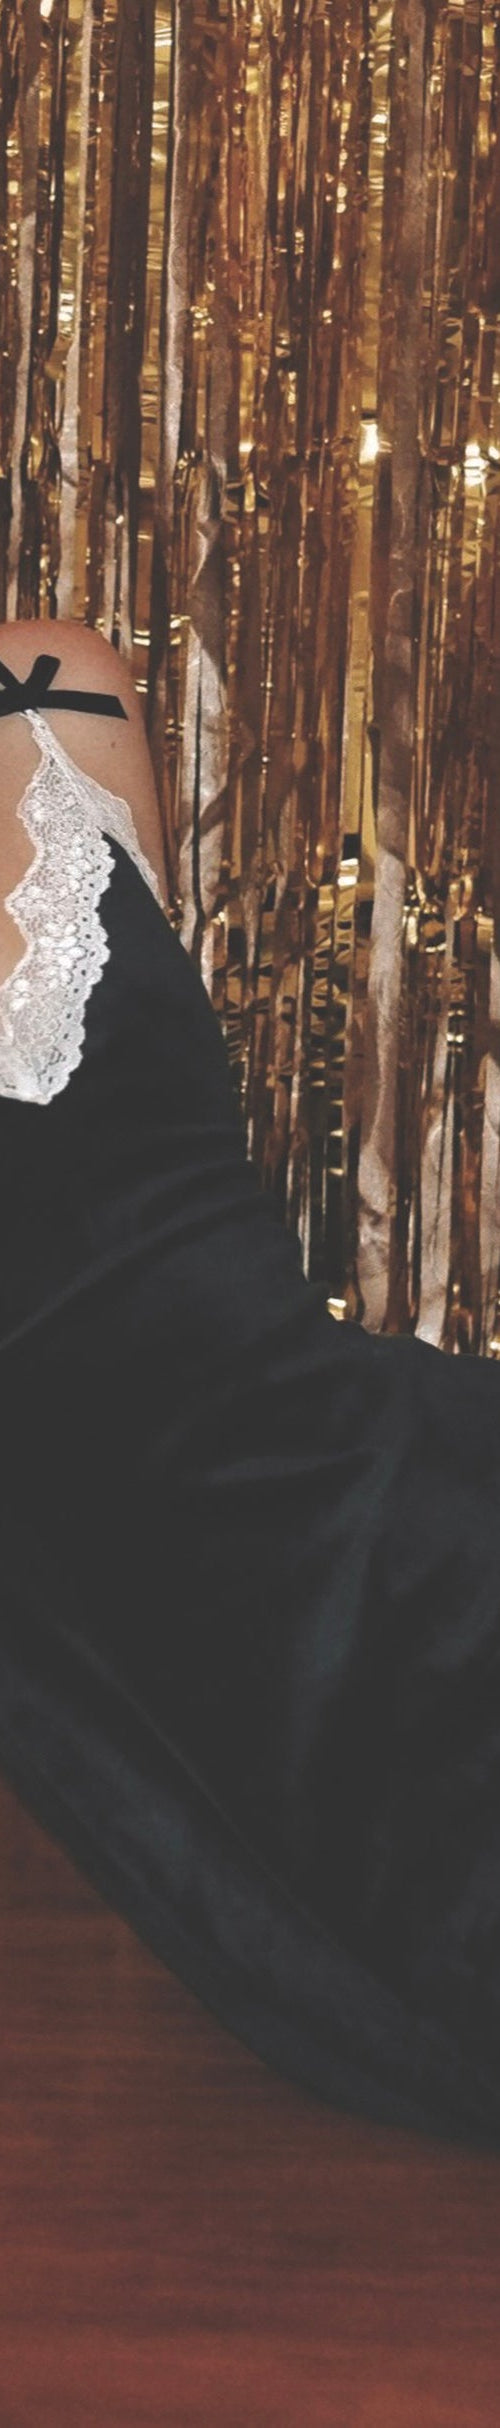 Image of Araminta Mini Dress in Black Velvet with White Lace Detail